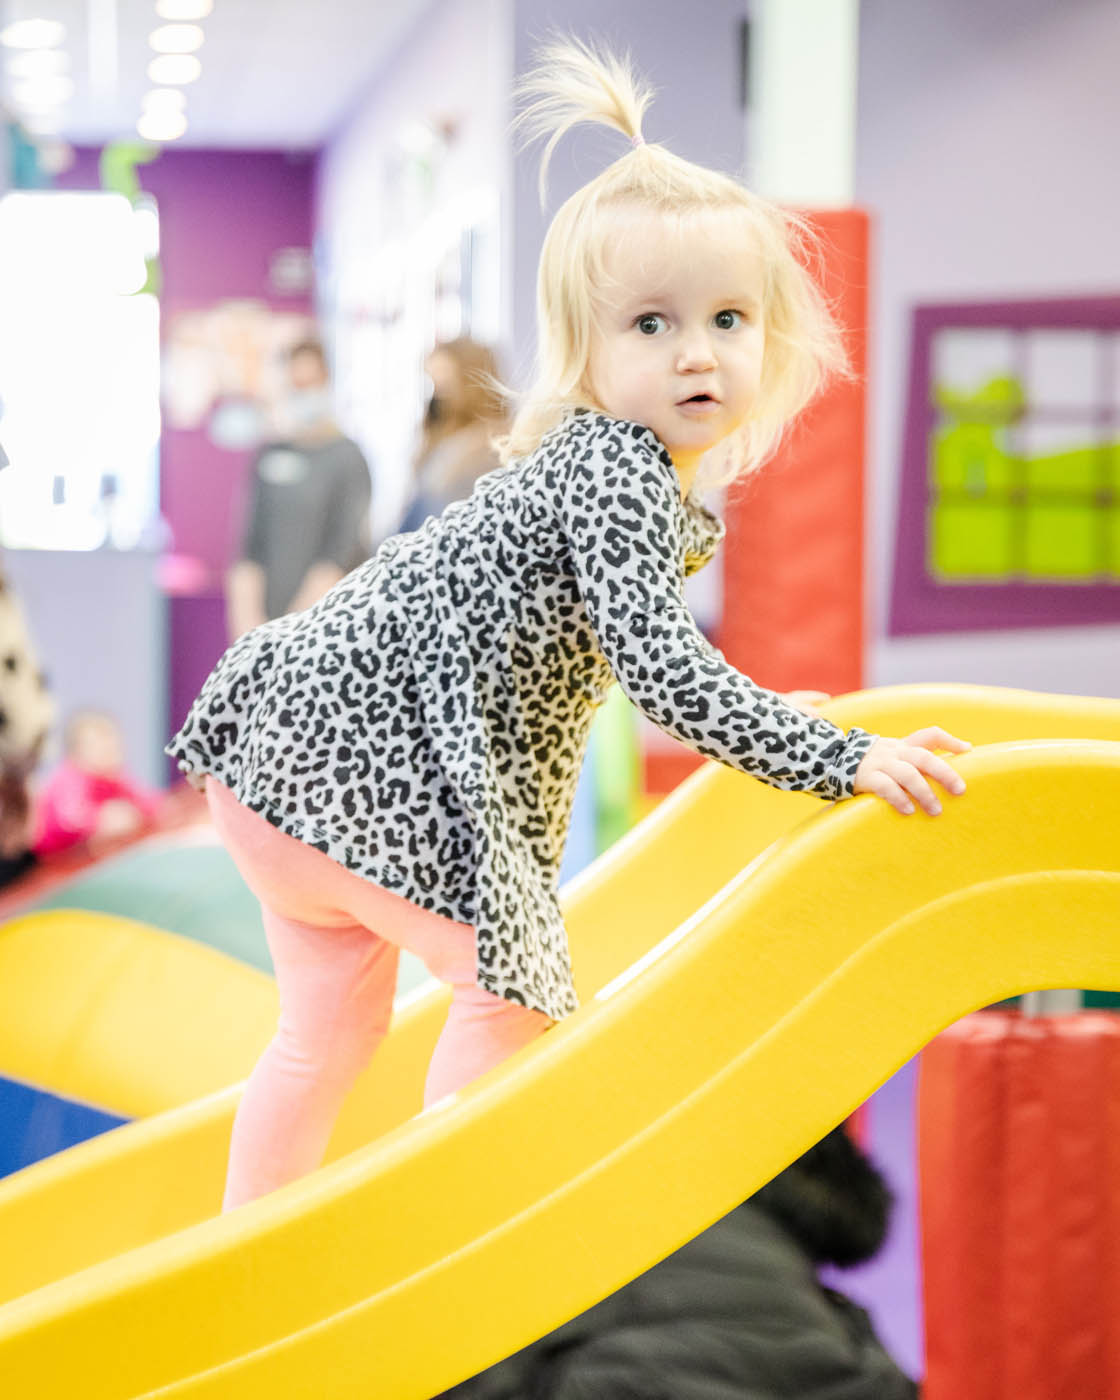 A little girl climbing up a yellow slide at Romp n' Roll.